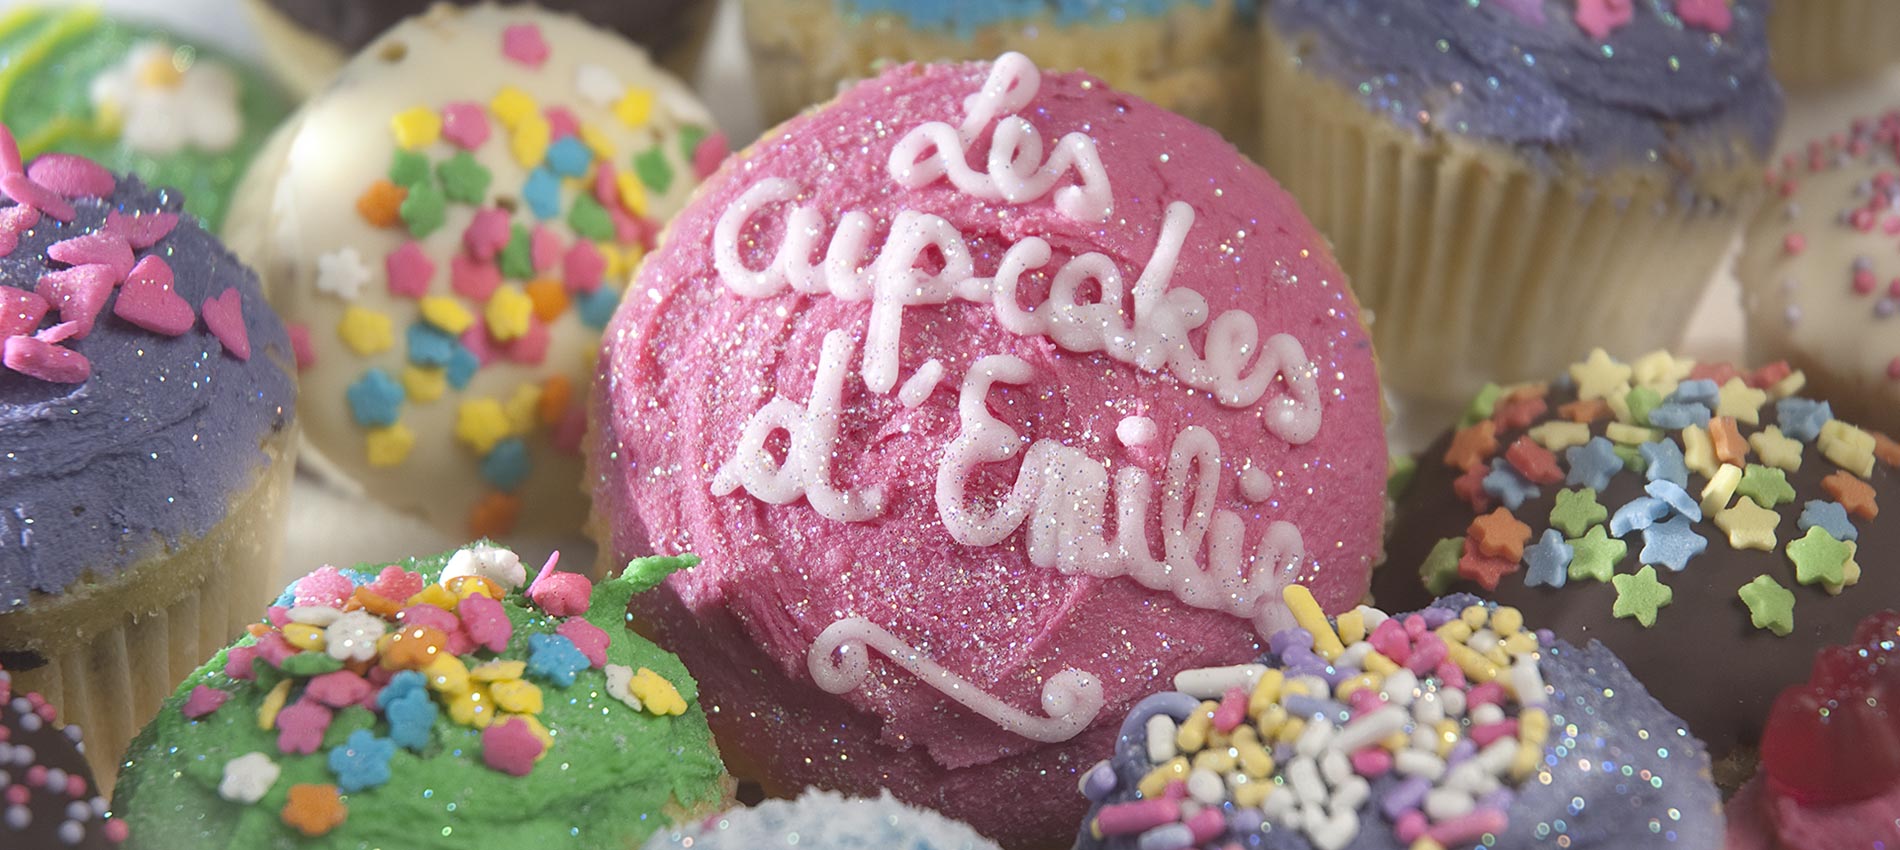 Nutella/Speculoos &mdash; Les Cupcakes d'Emilie